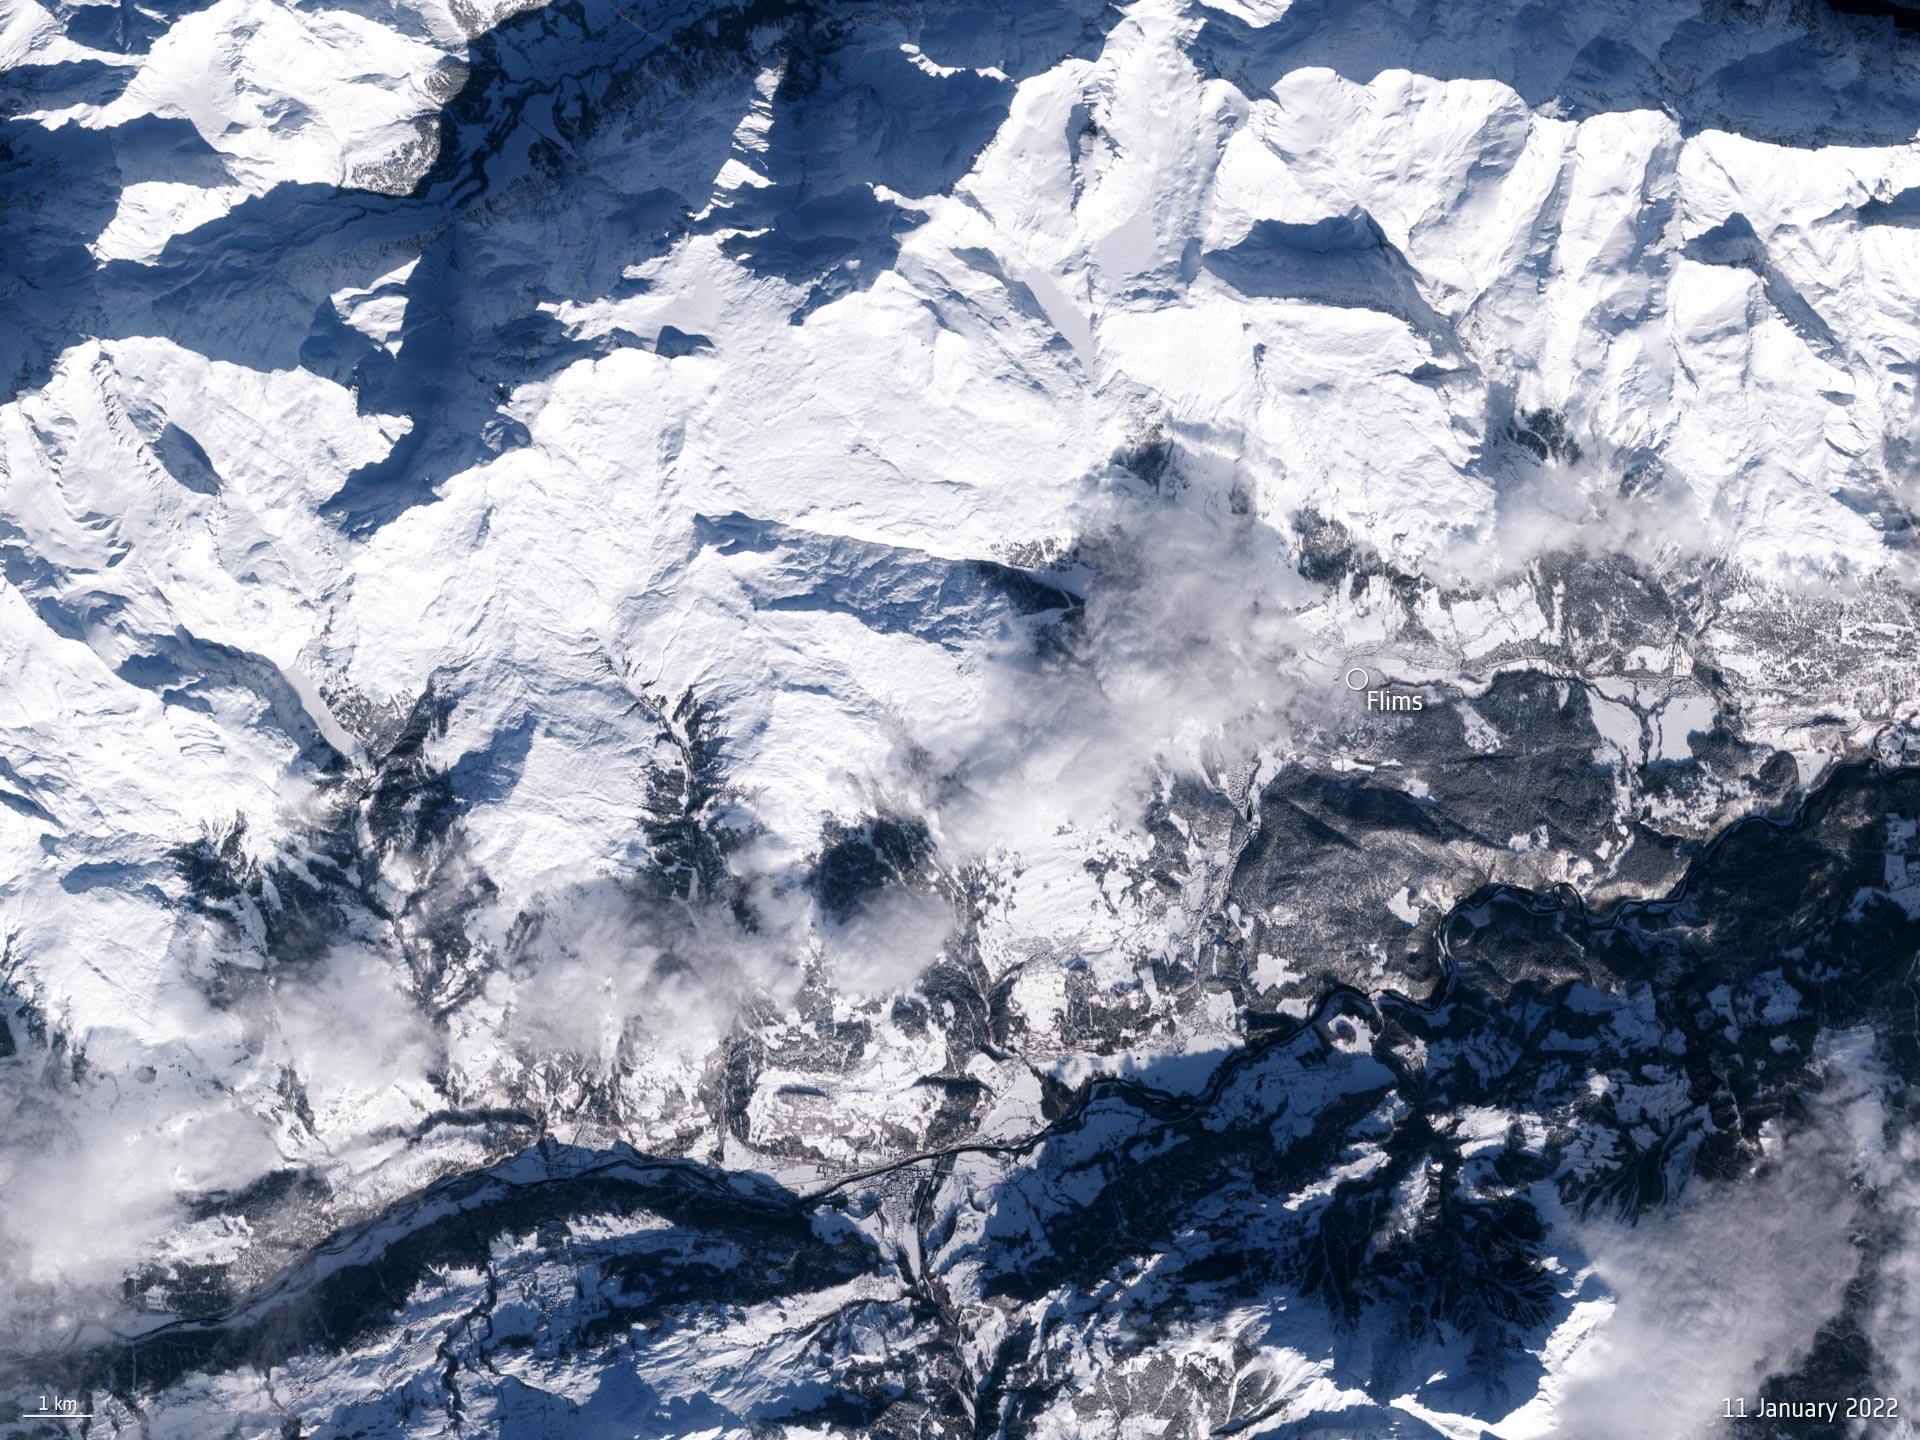 Recent Alps snow cover decline 'unprecedented' in past 600 years